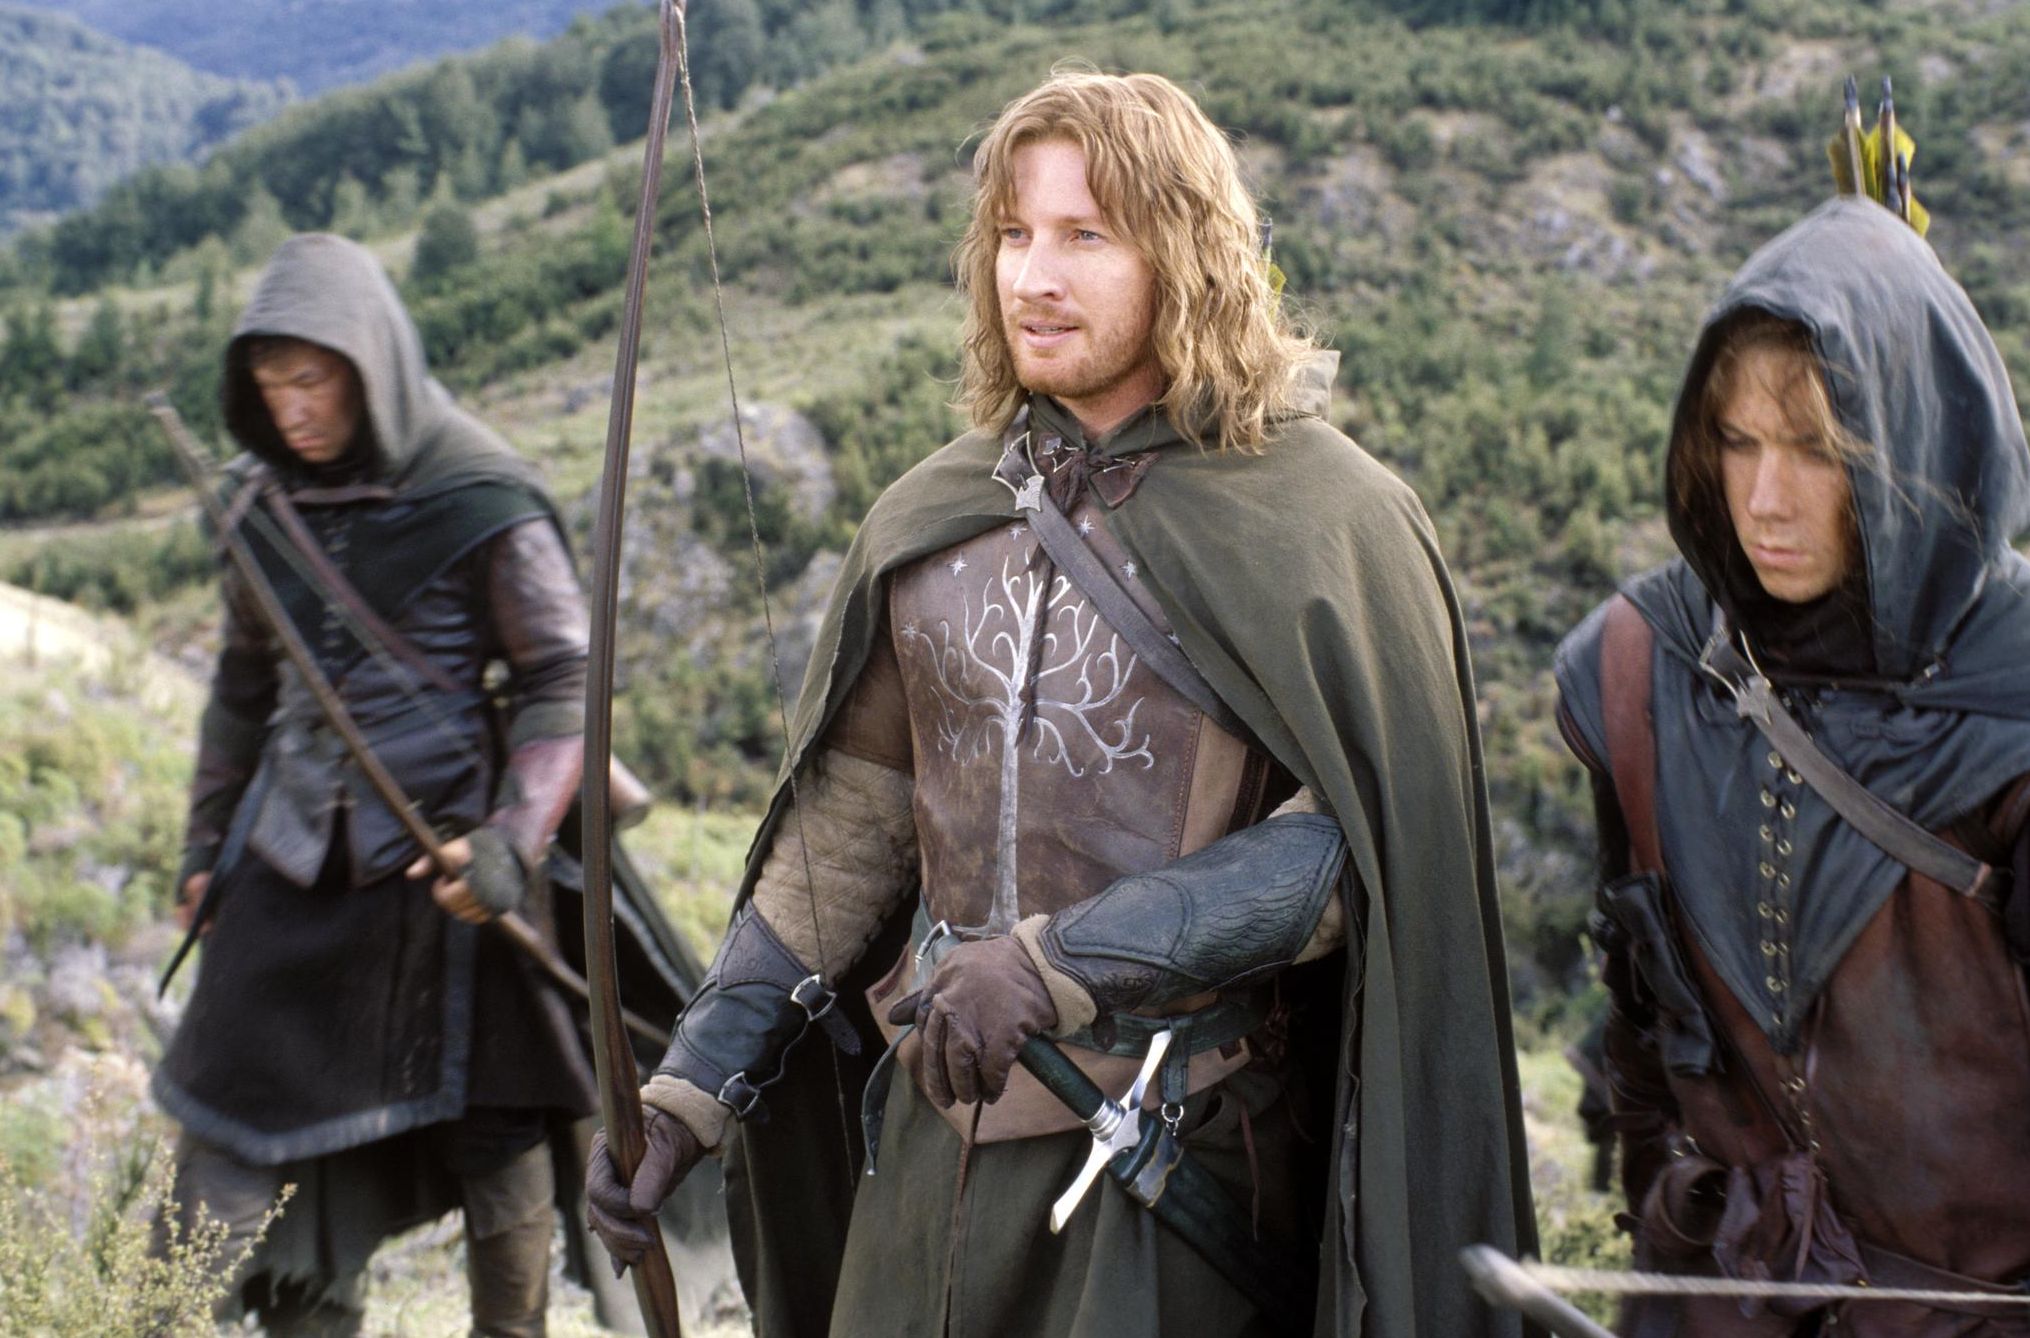 Lord of the Rings' David Wenham